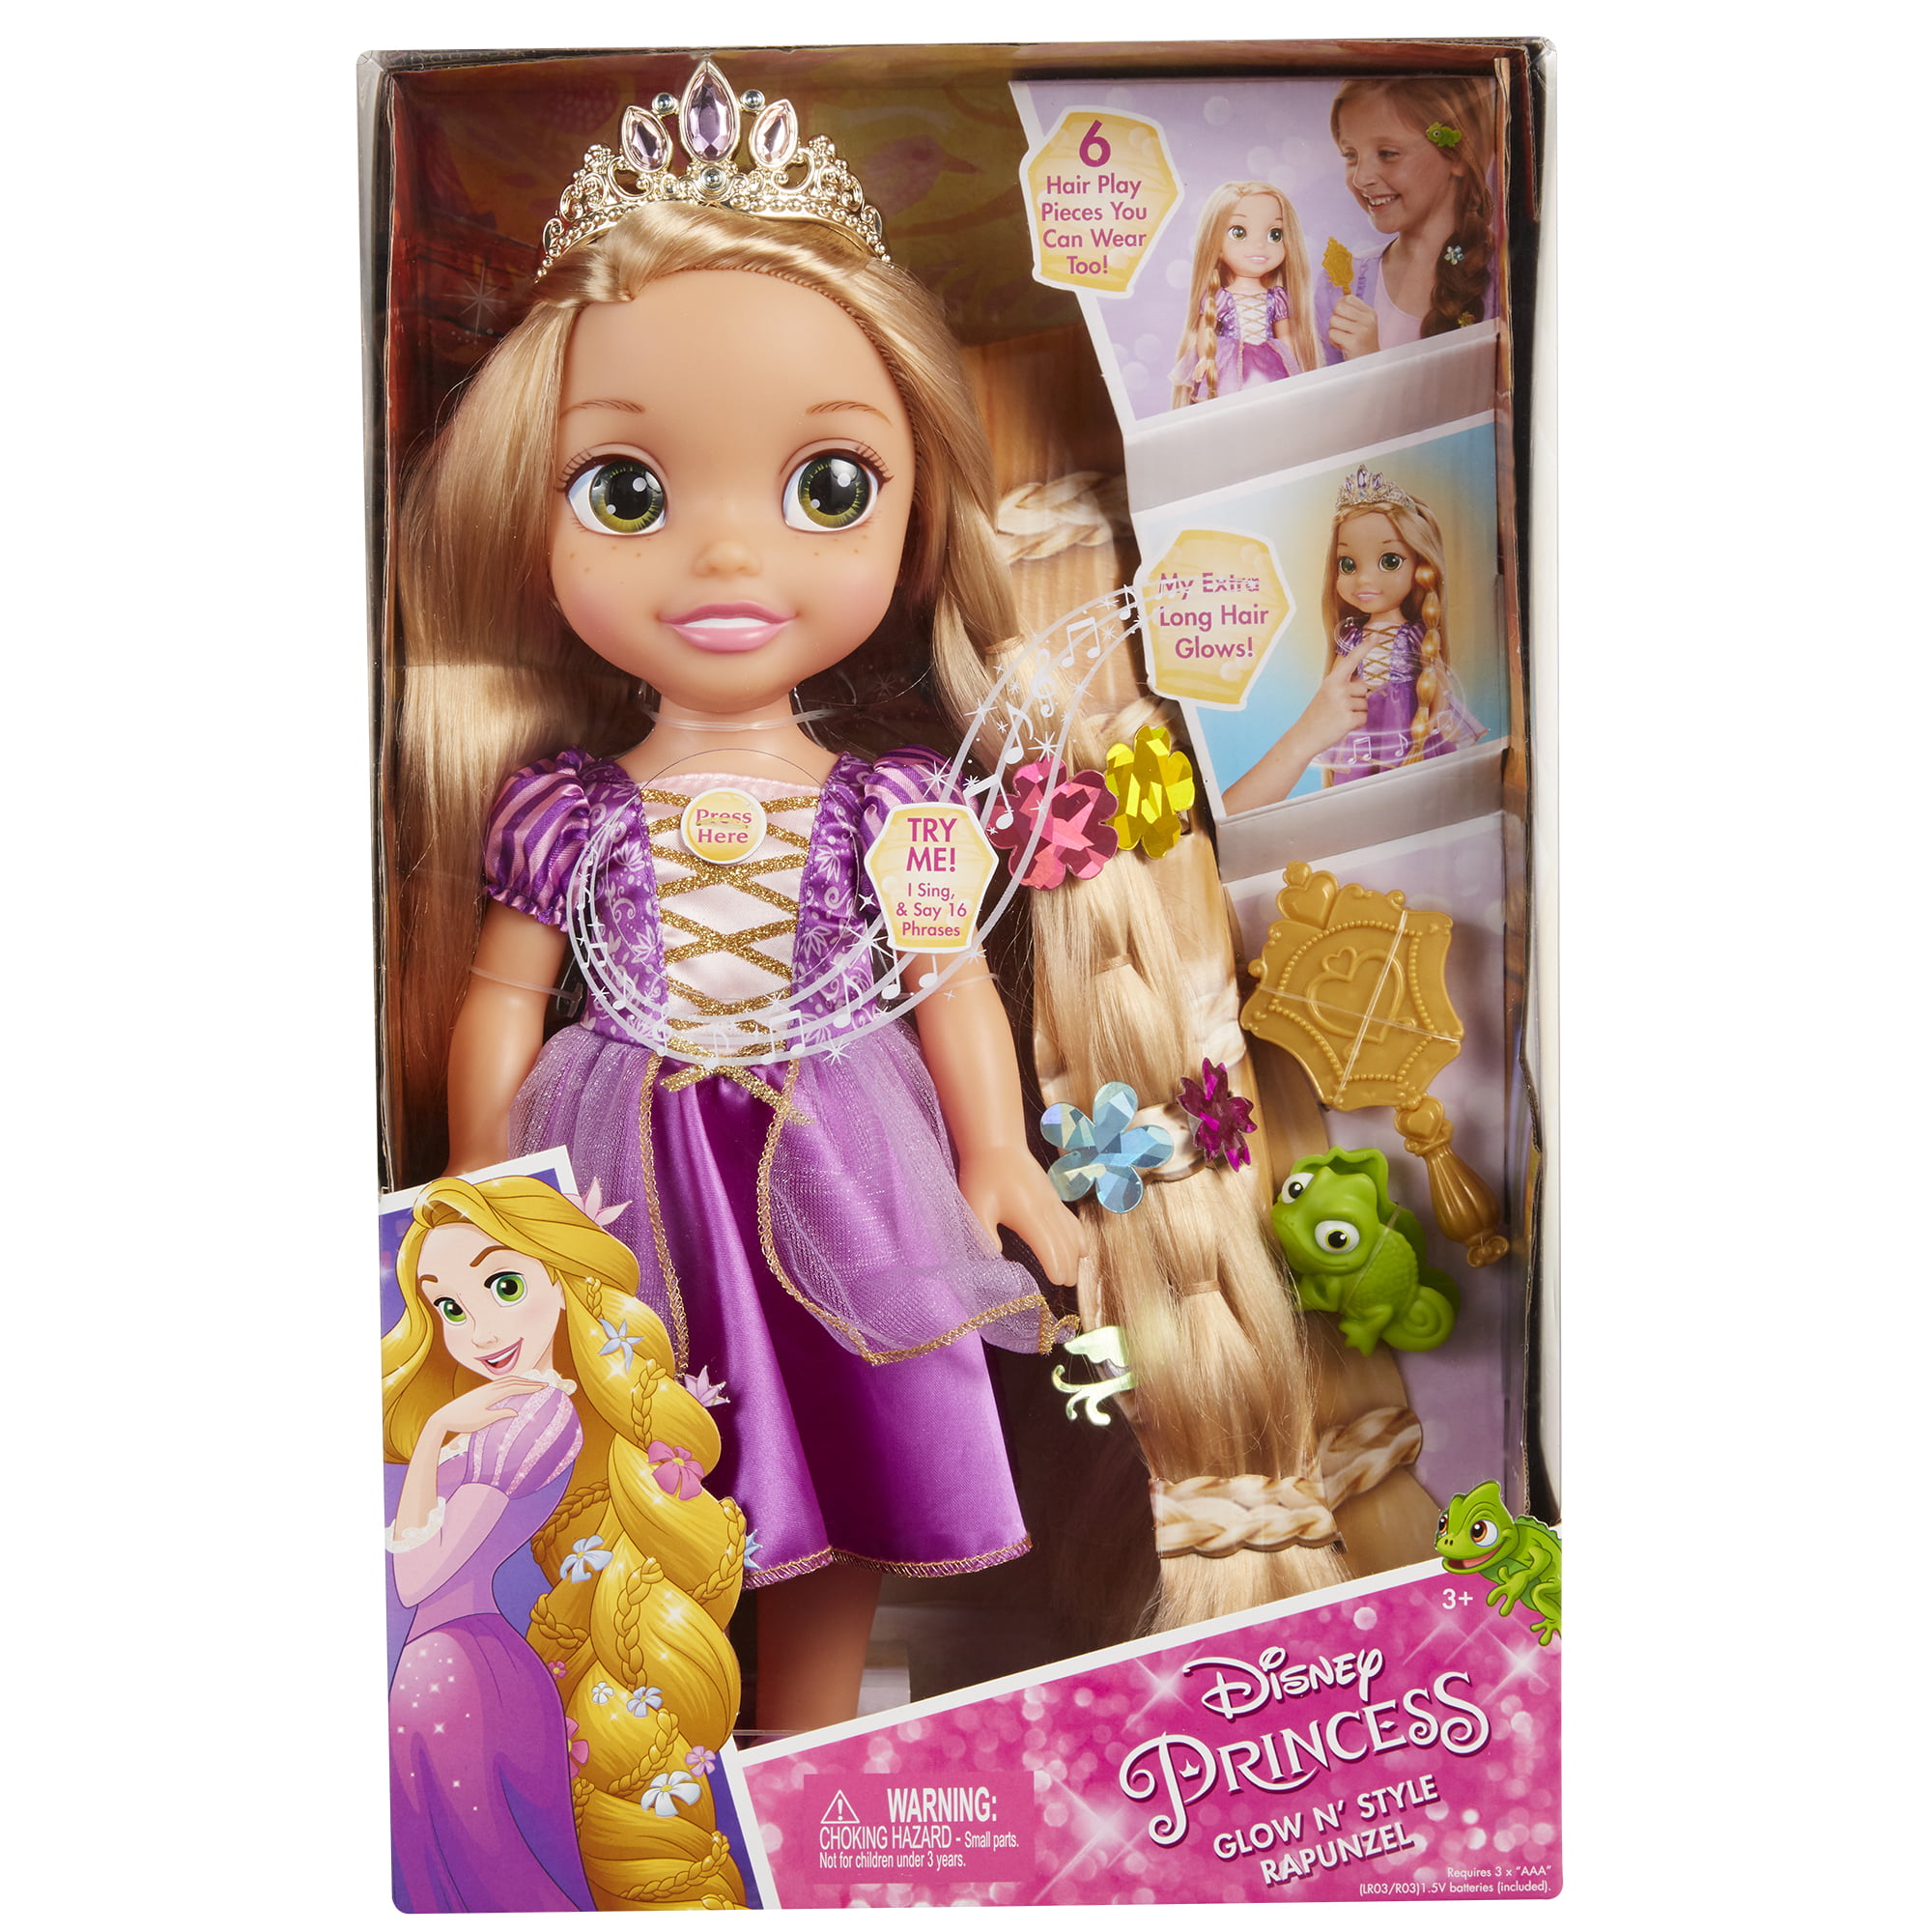 Disney princess bambola Rapunzel glow large 